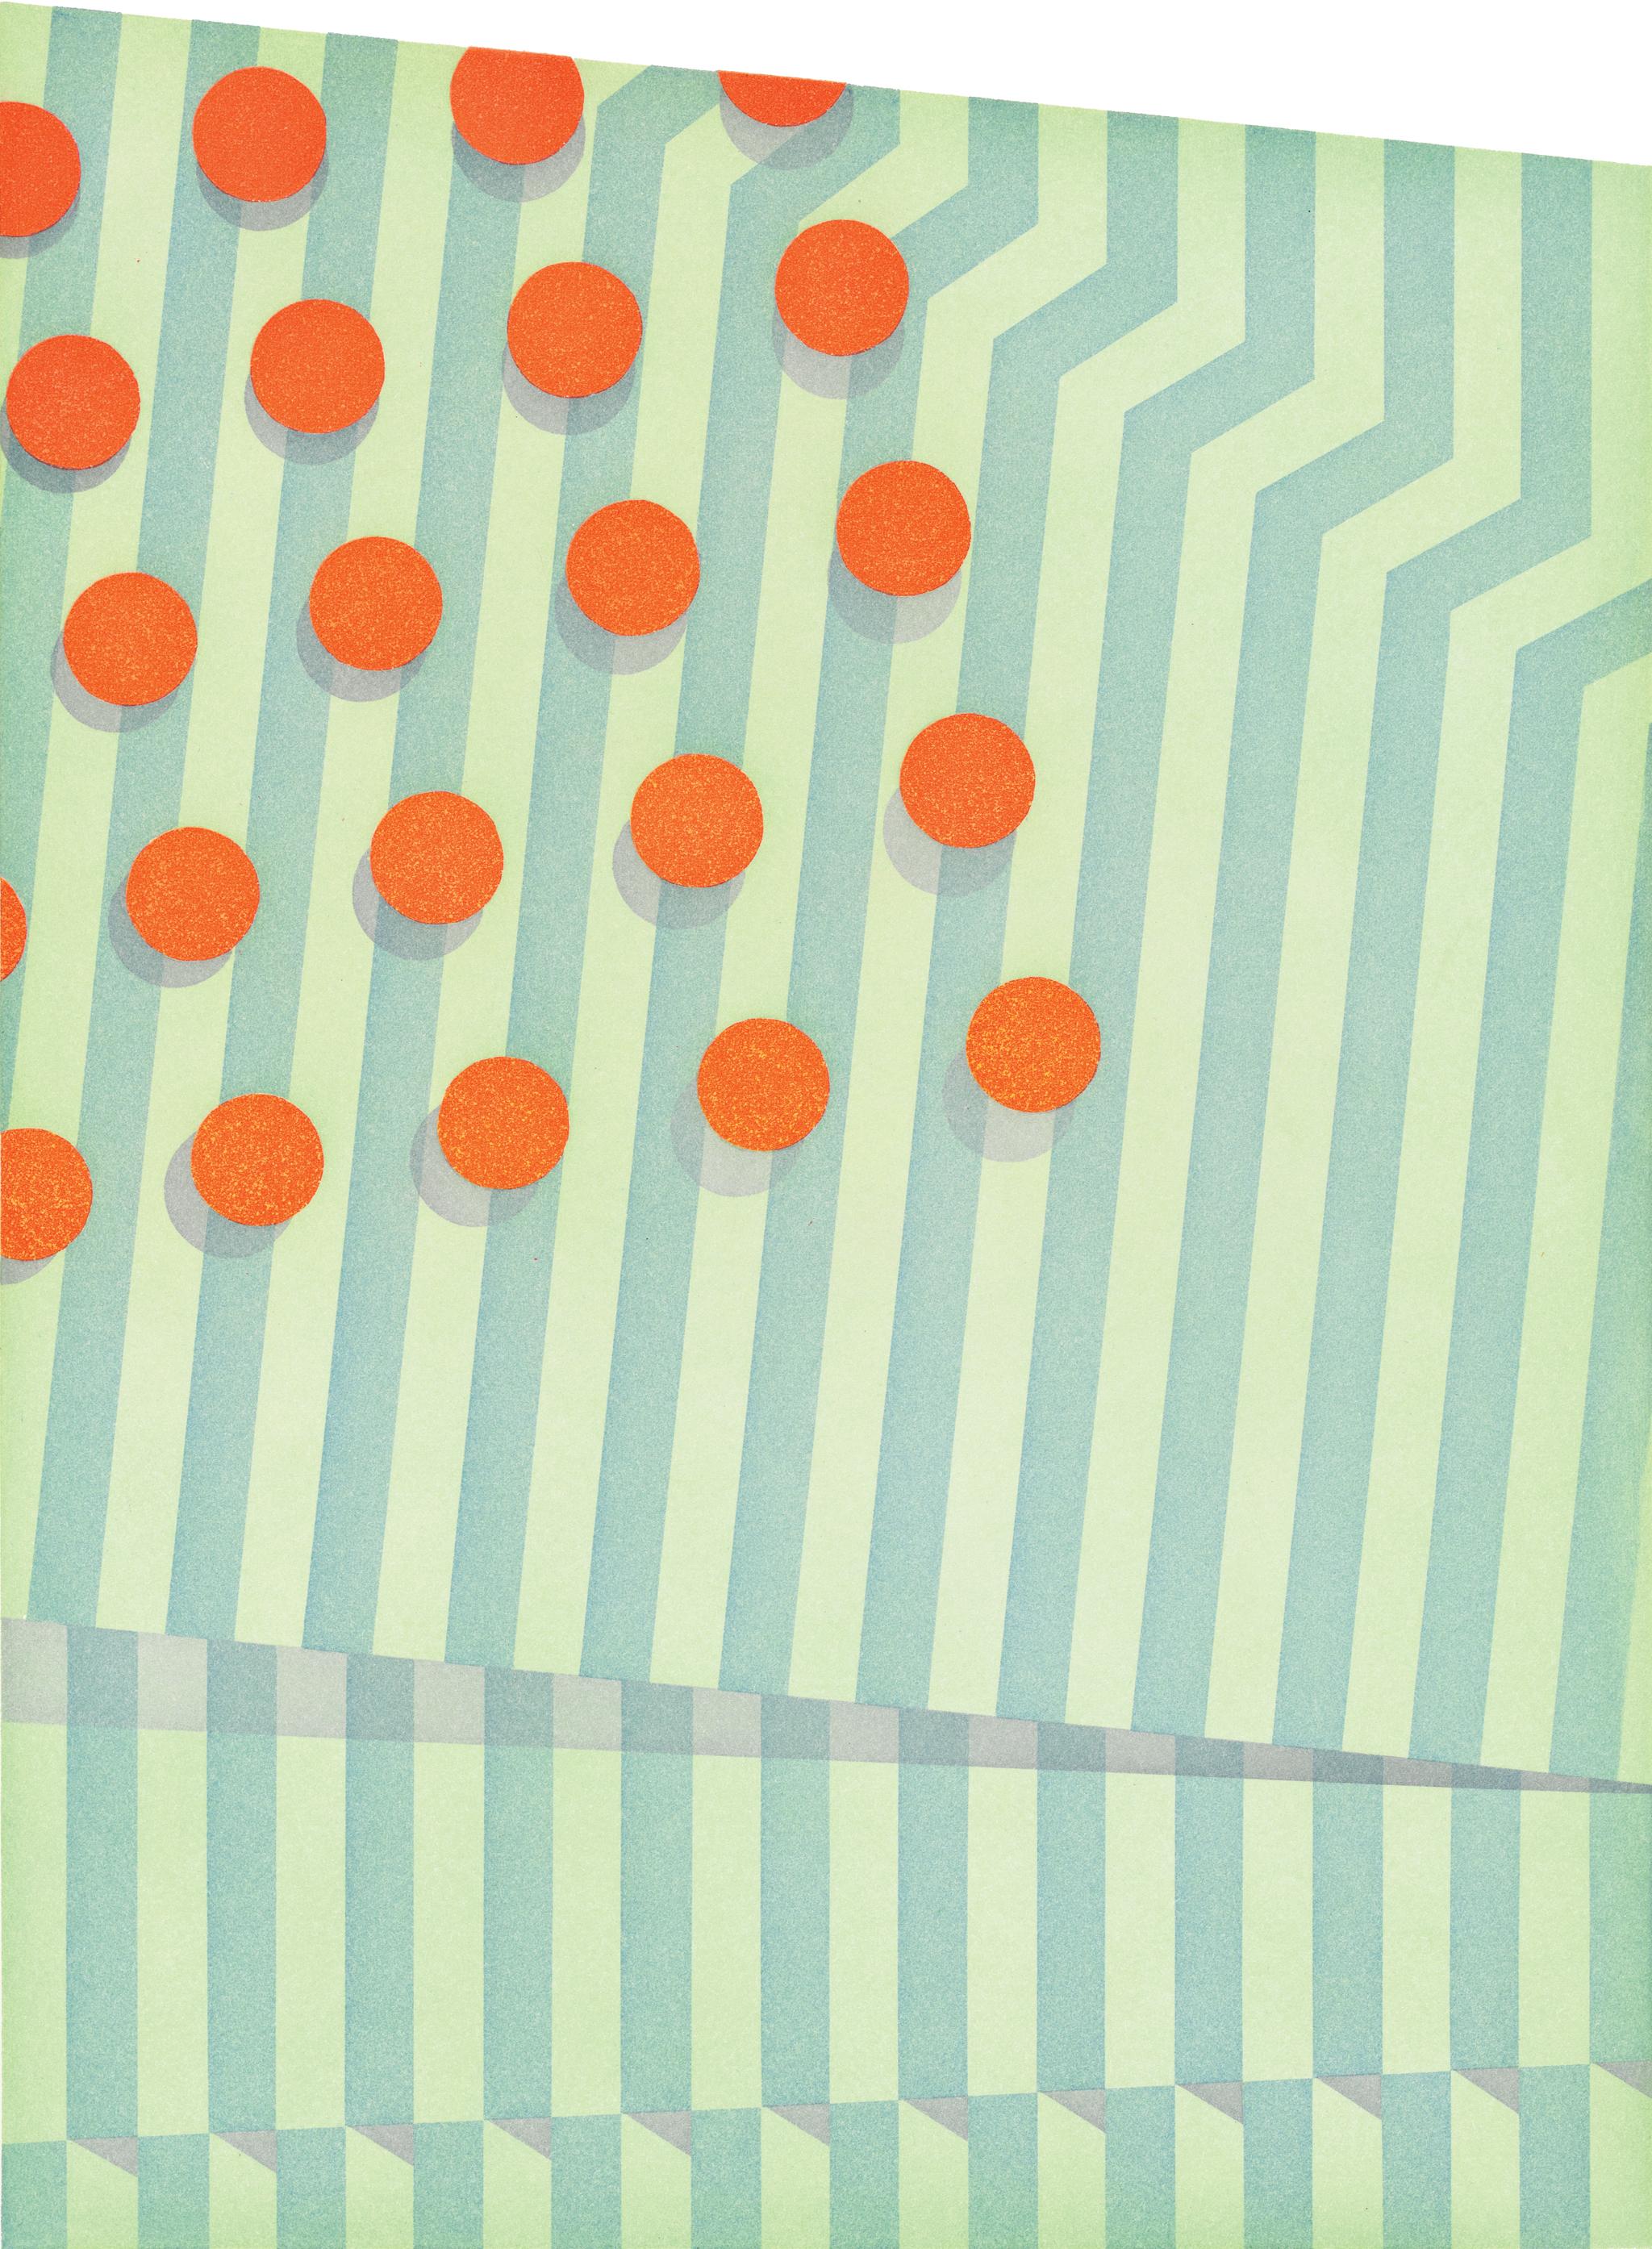 Tomma Abts Abstract Print - Untitled (small circles)